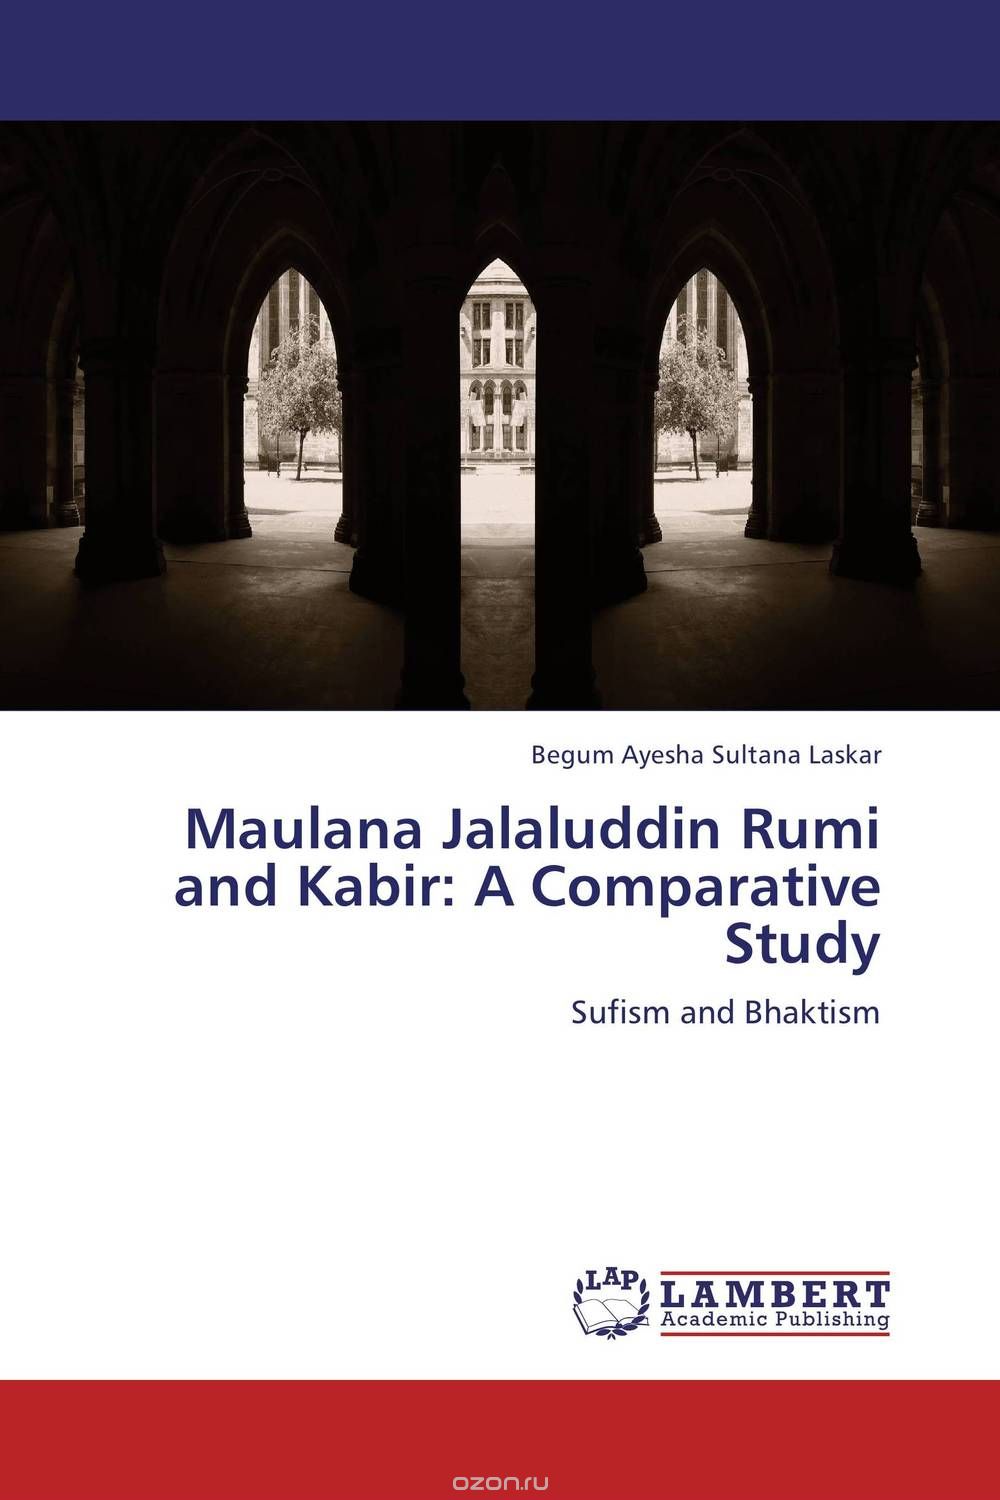 Maulana Jalaluddin Rumi and Kabir: A Comparative Study